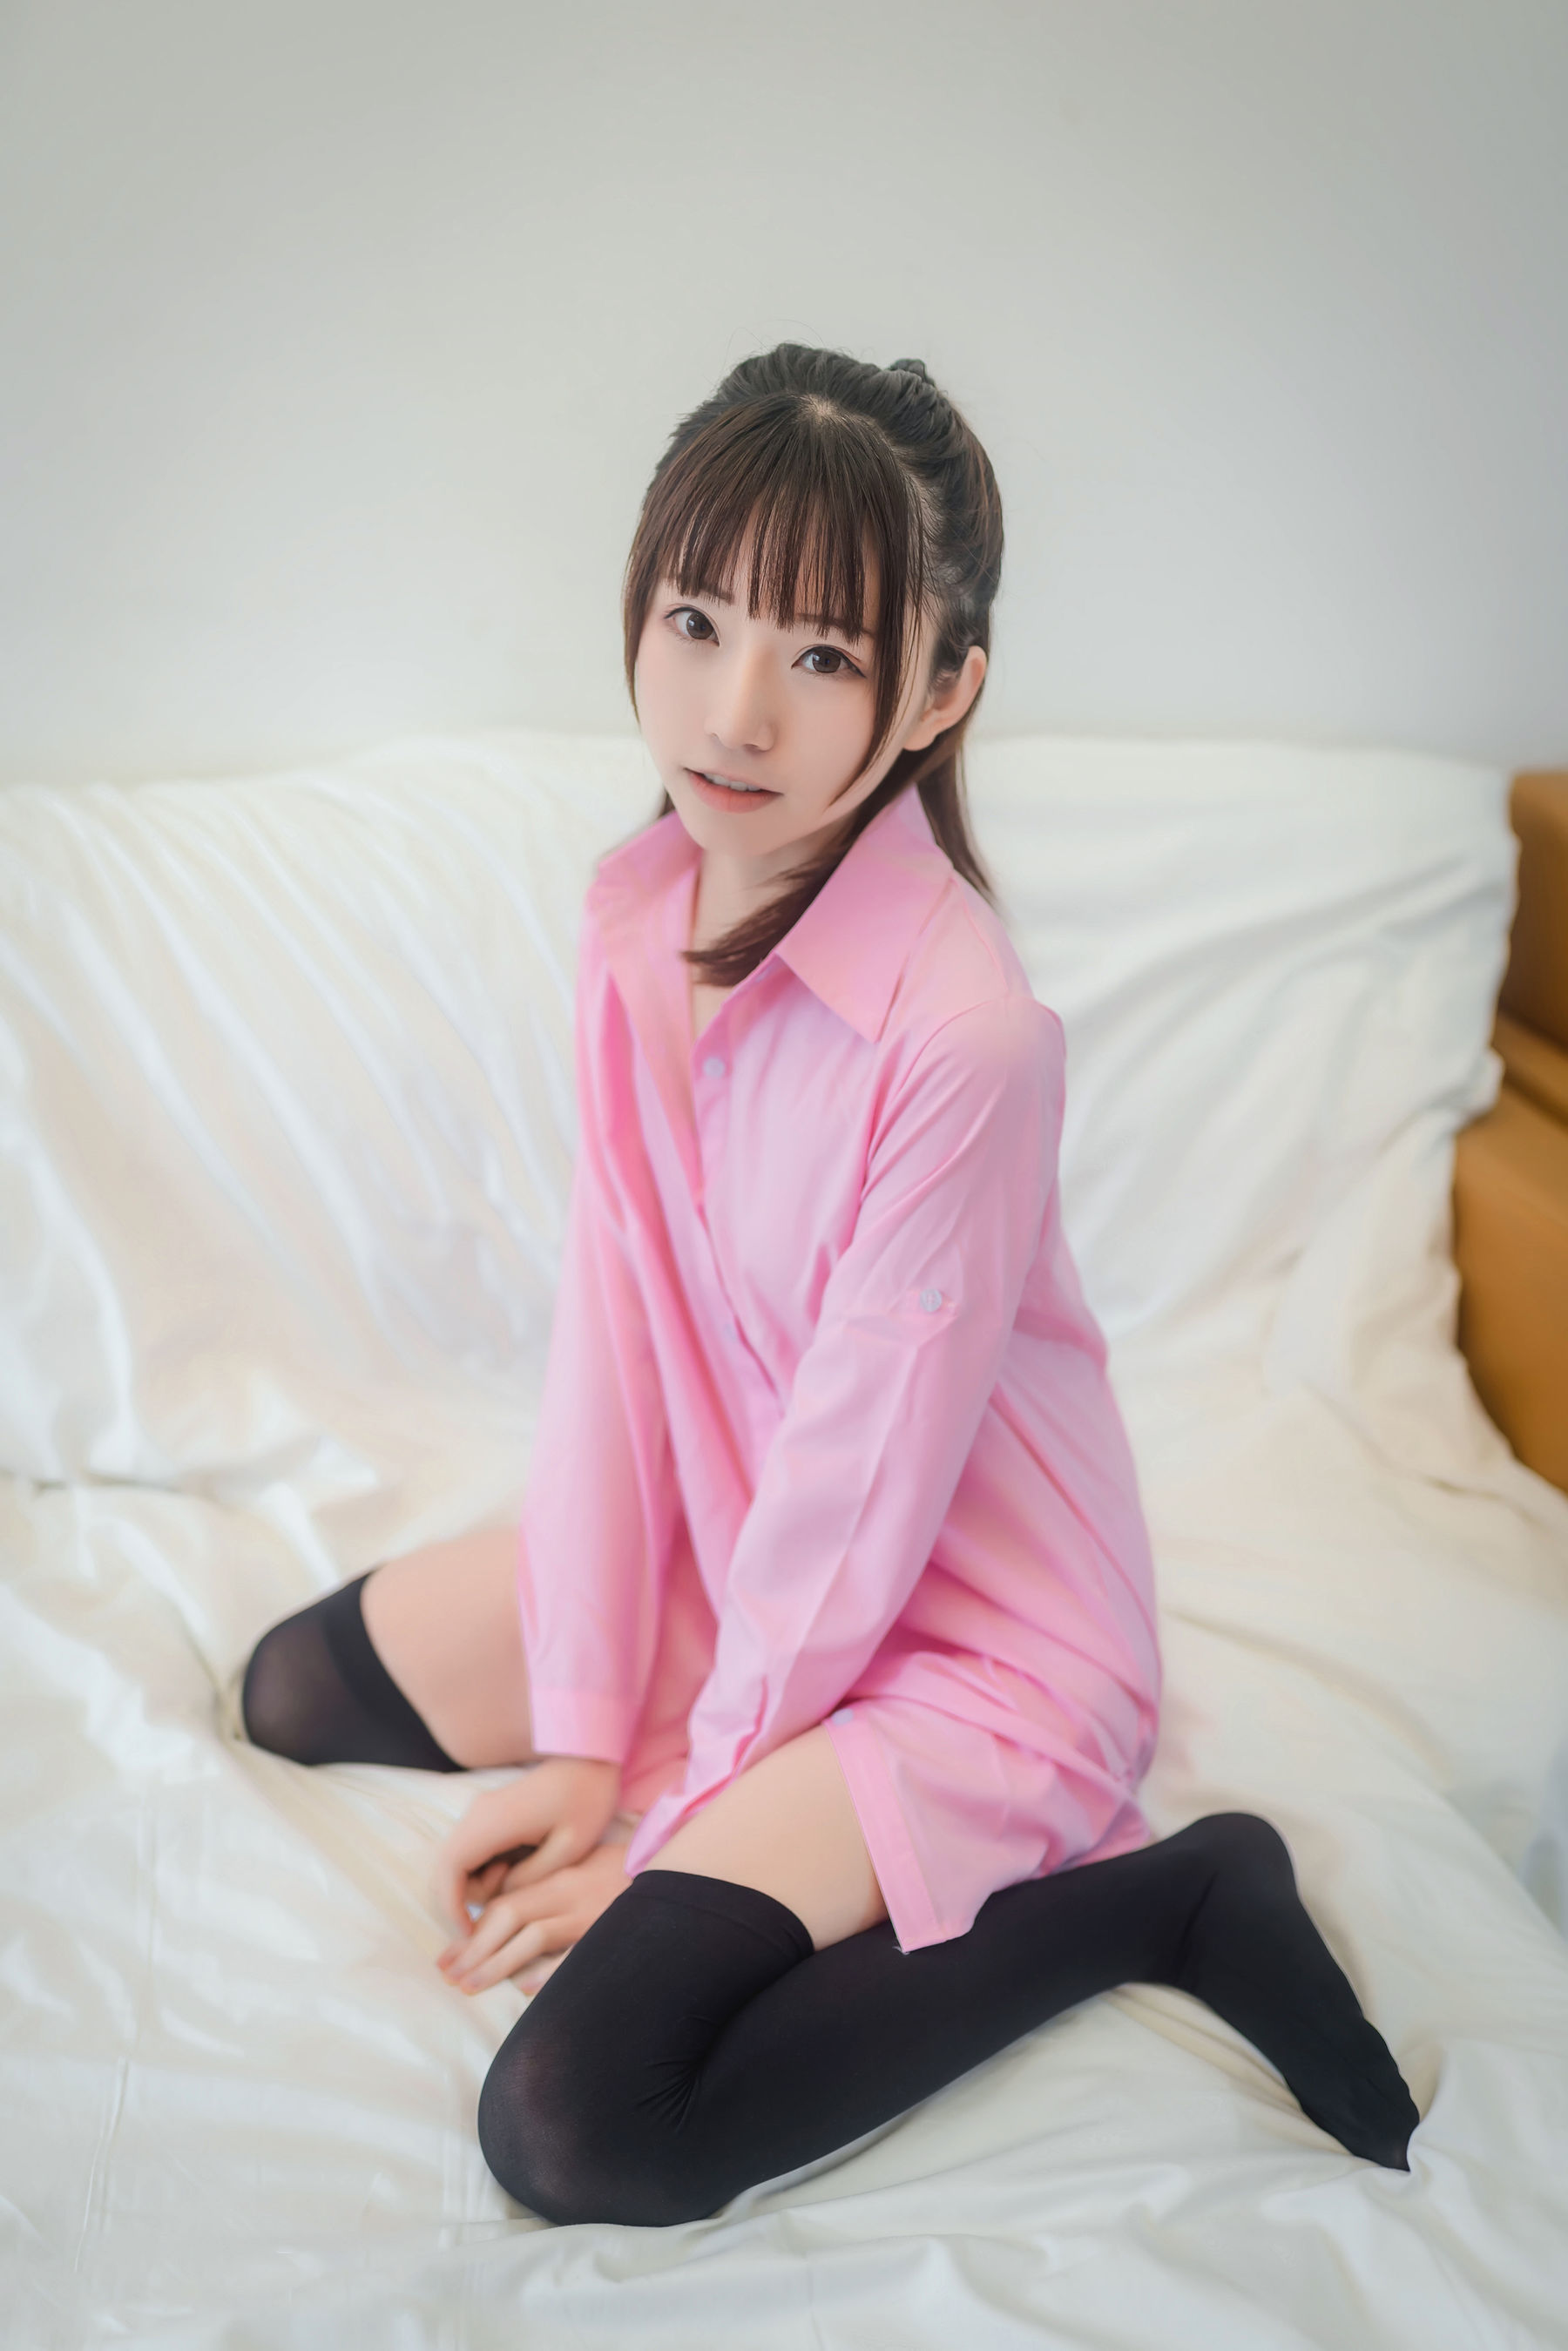 [网红COSER] 动漫博主Kitaro_绮太郎 - 粉色衬衫